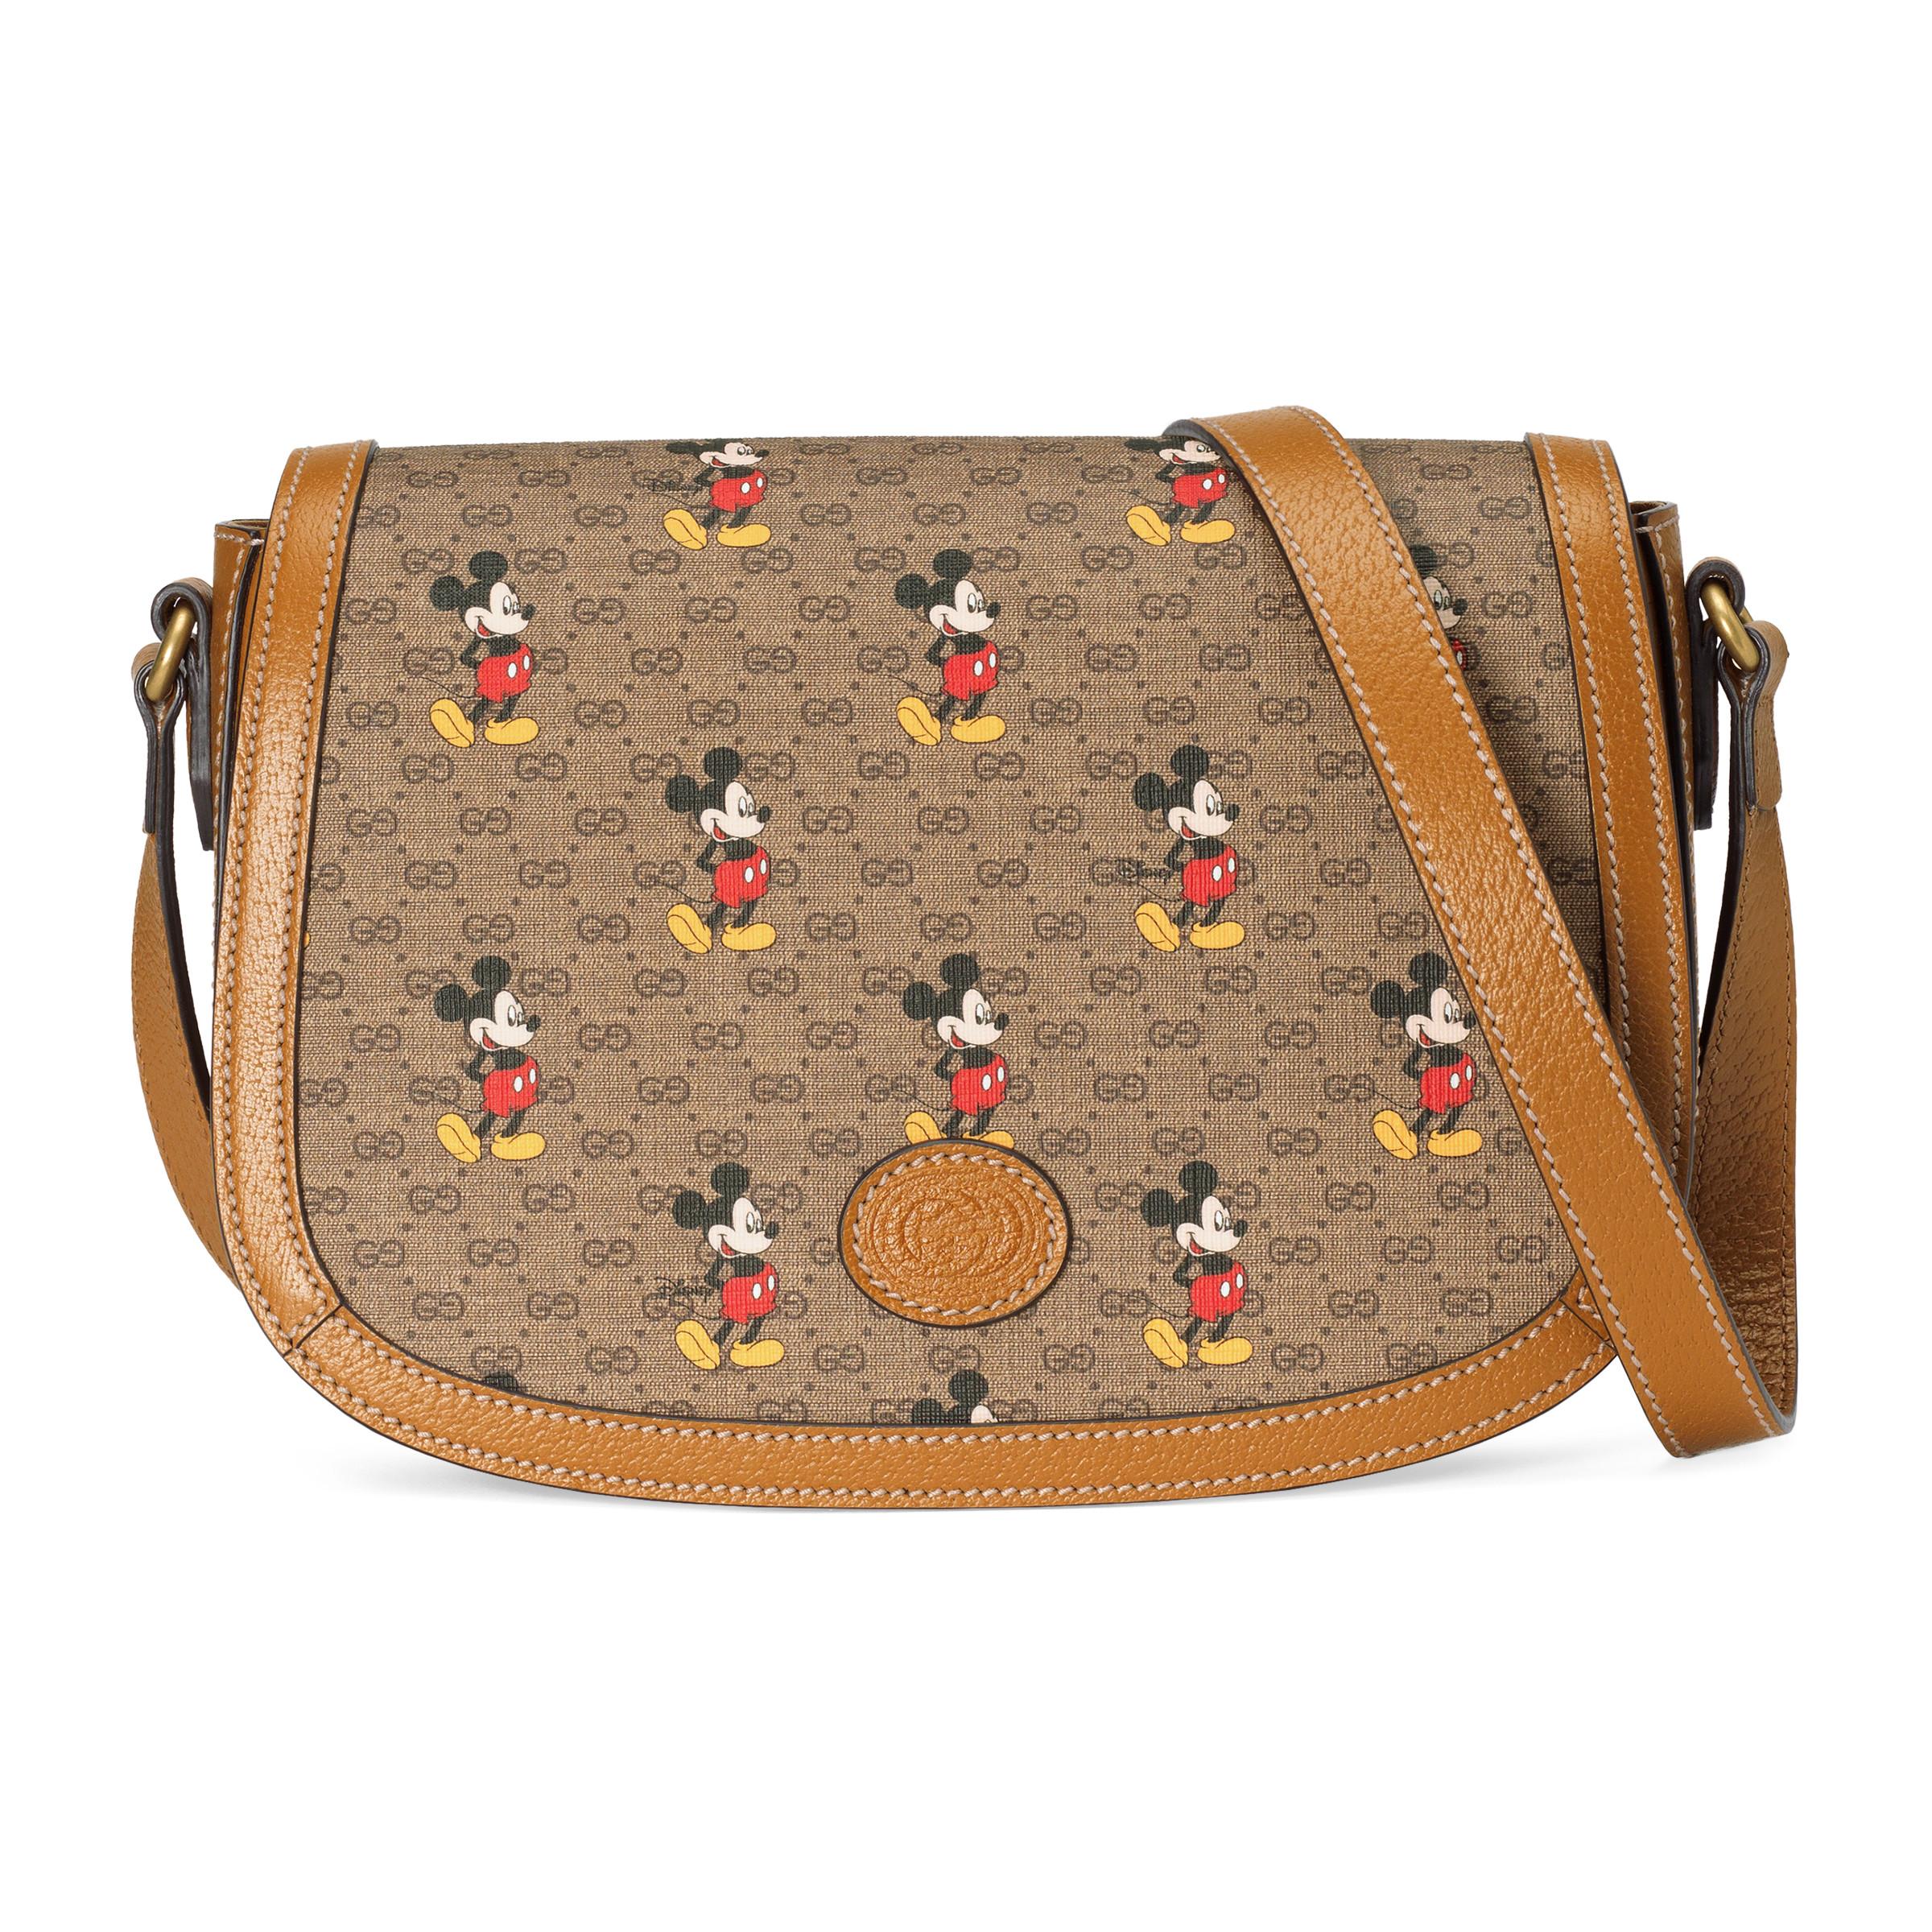 Gucci Disney X Small Shoulder Bag in Natural | Lyst